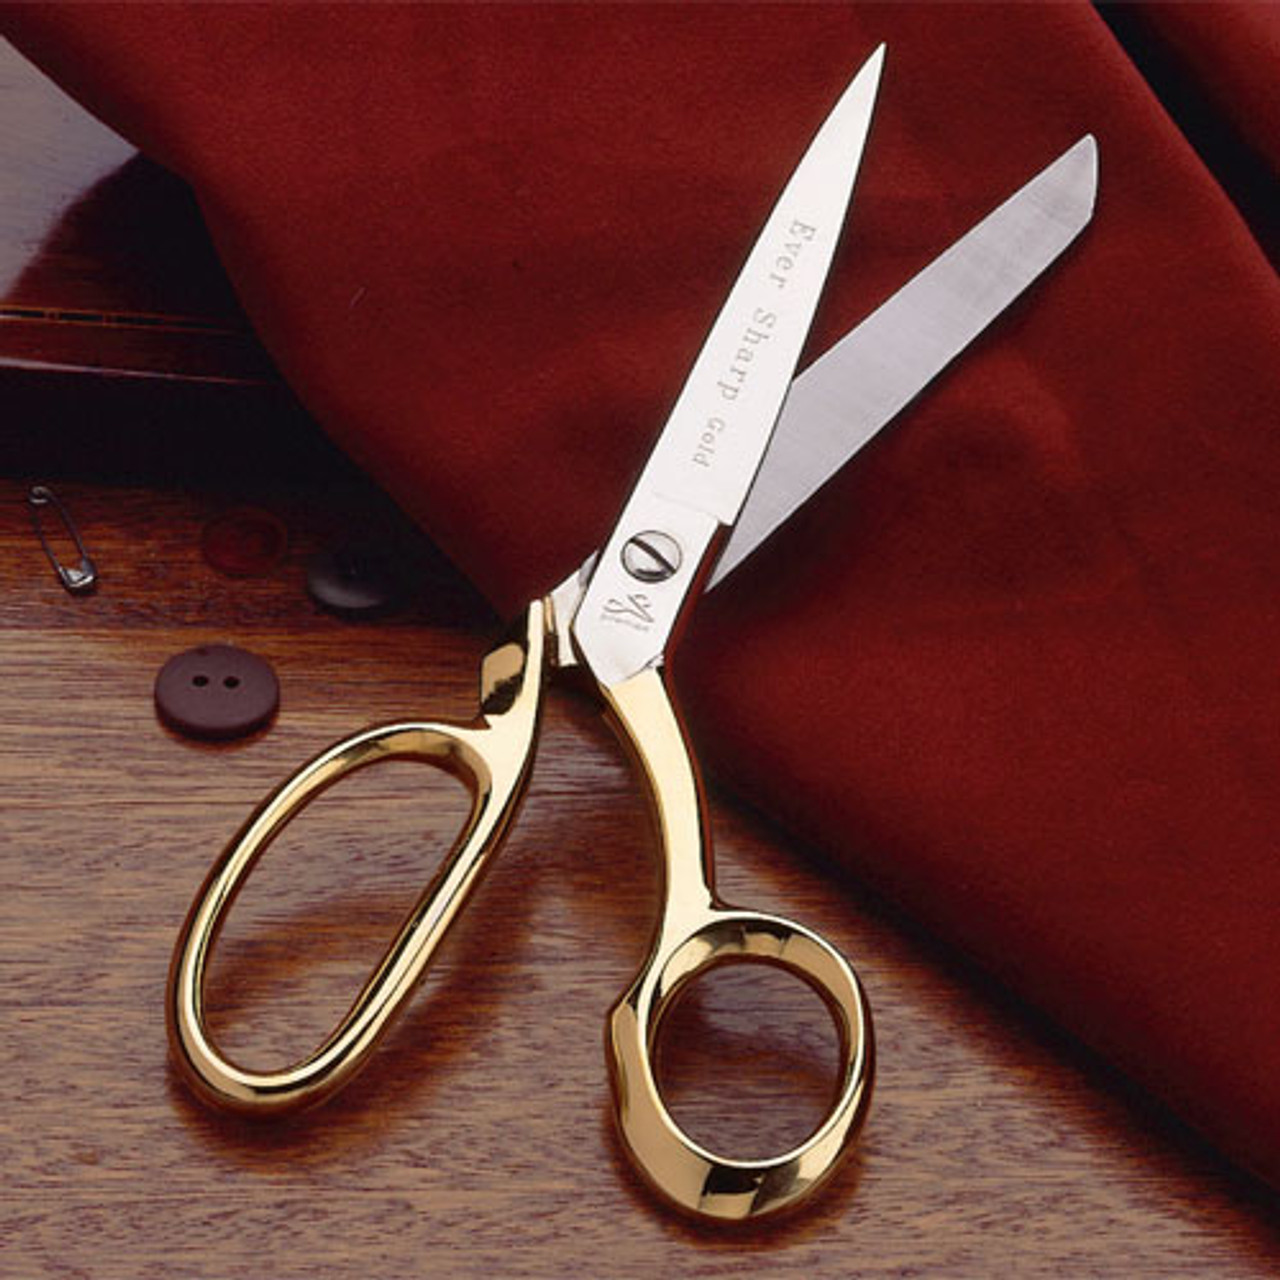 Fabric Scissors Professional 8 9 10 11 12 inch Heavy Duty Scissors